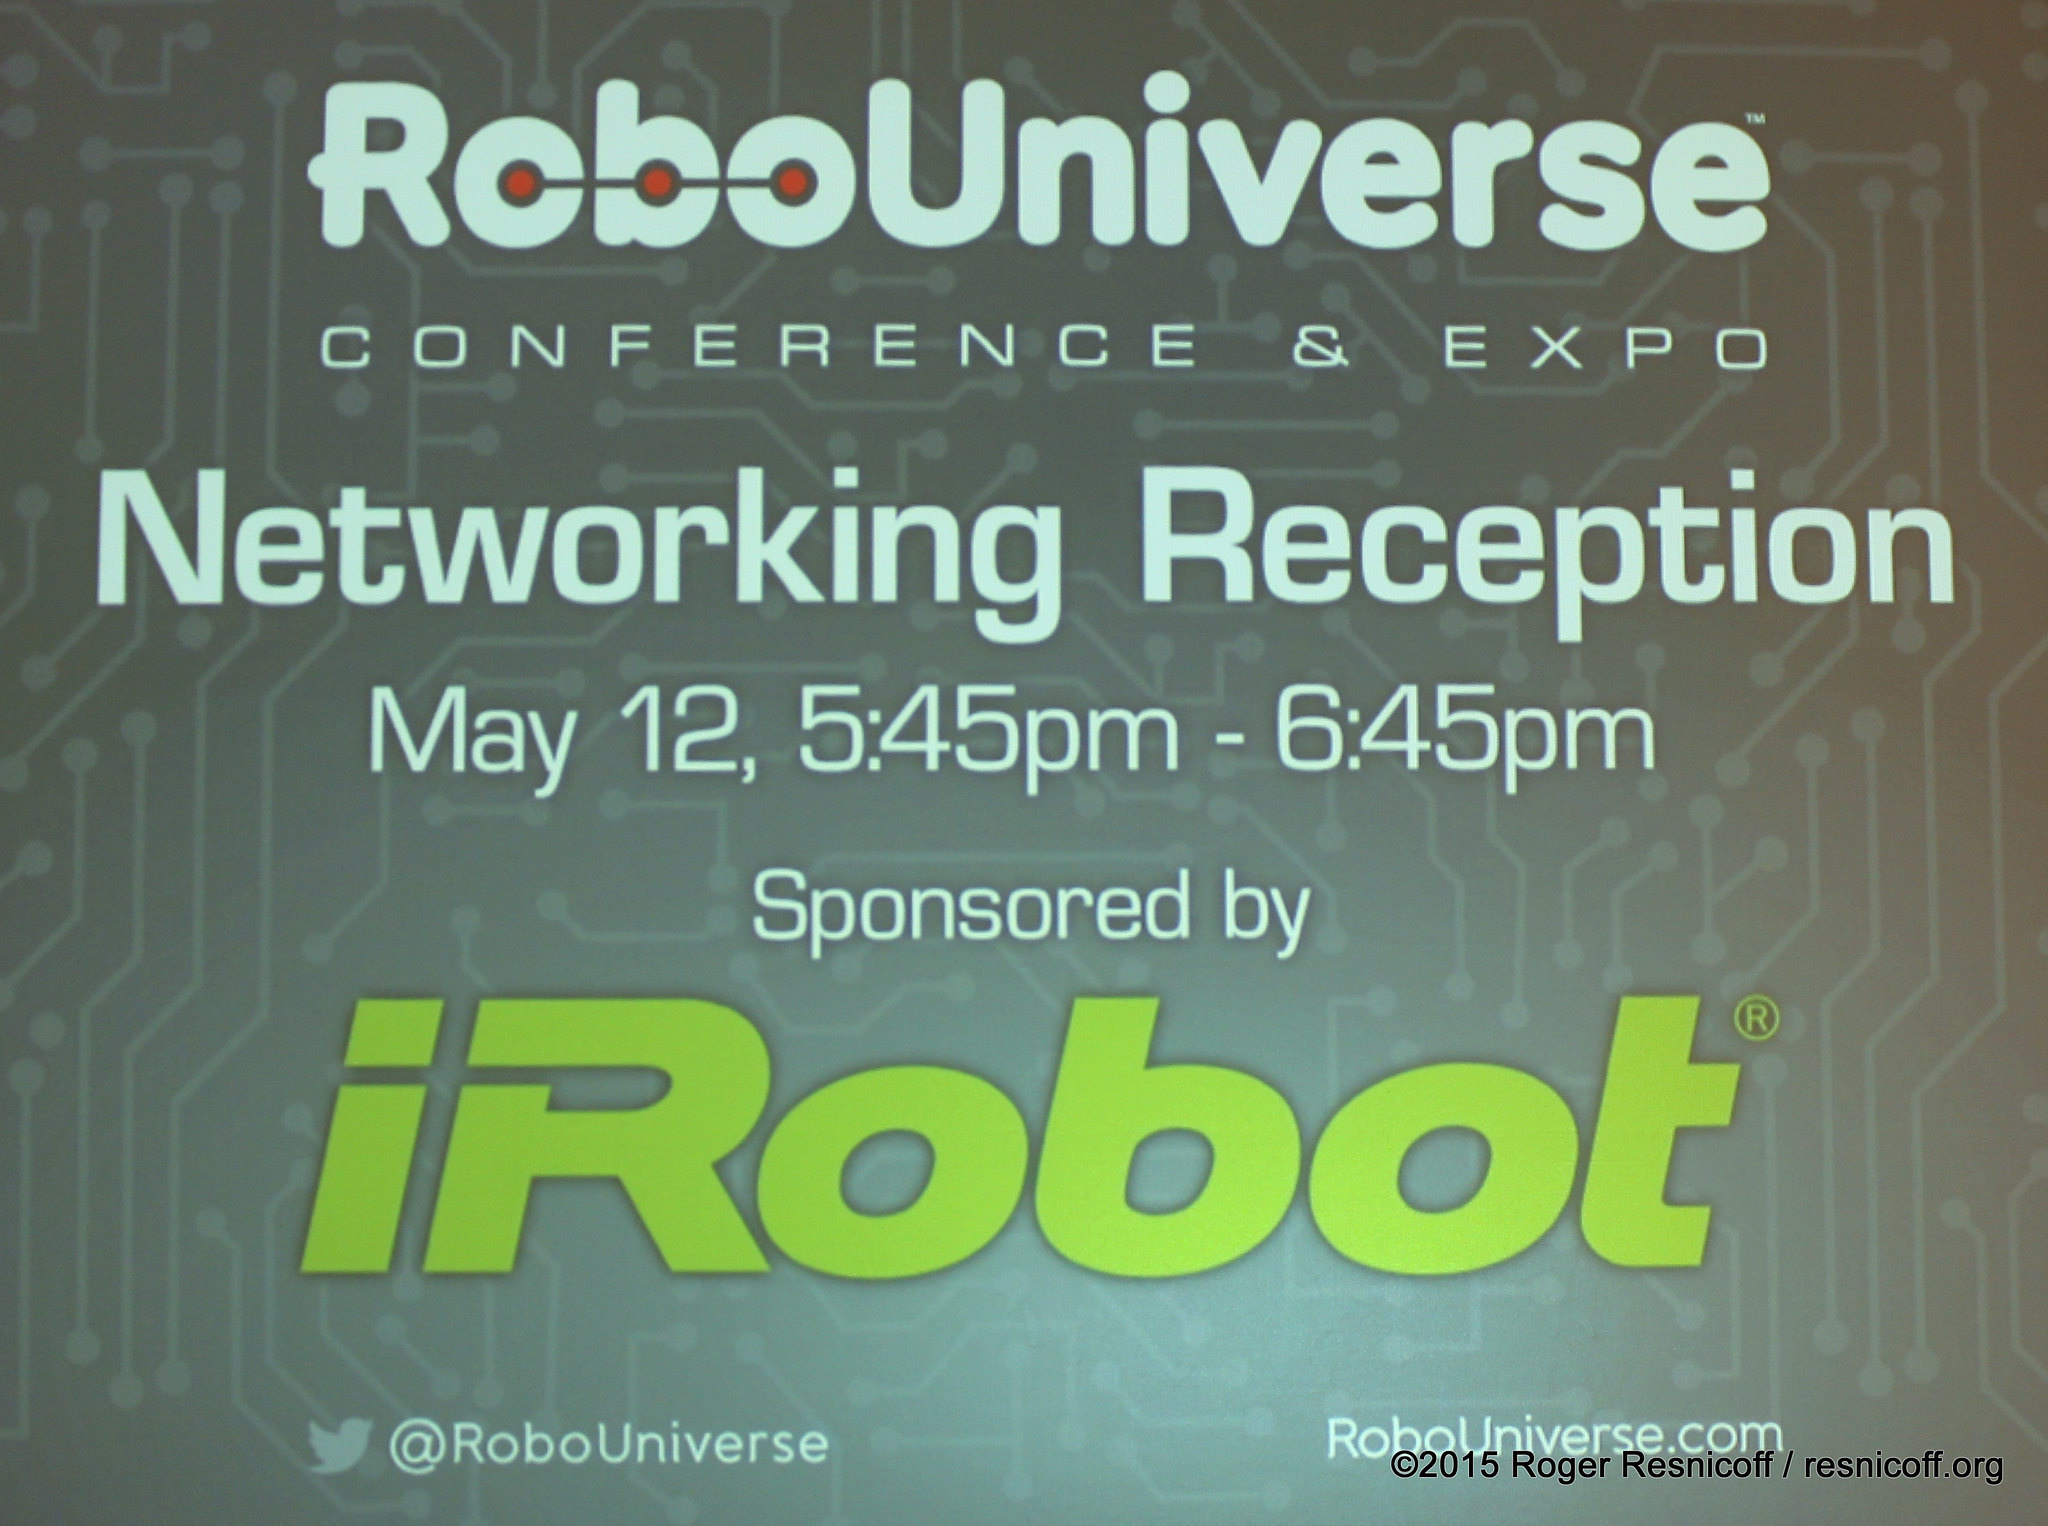 MecklerMedia's RoboUniverse Conference & Expo NYC 2015